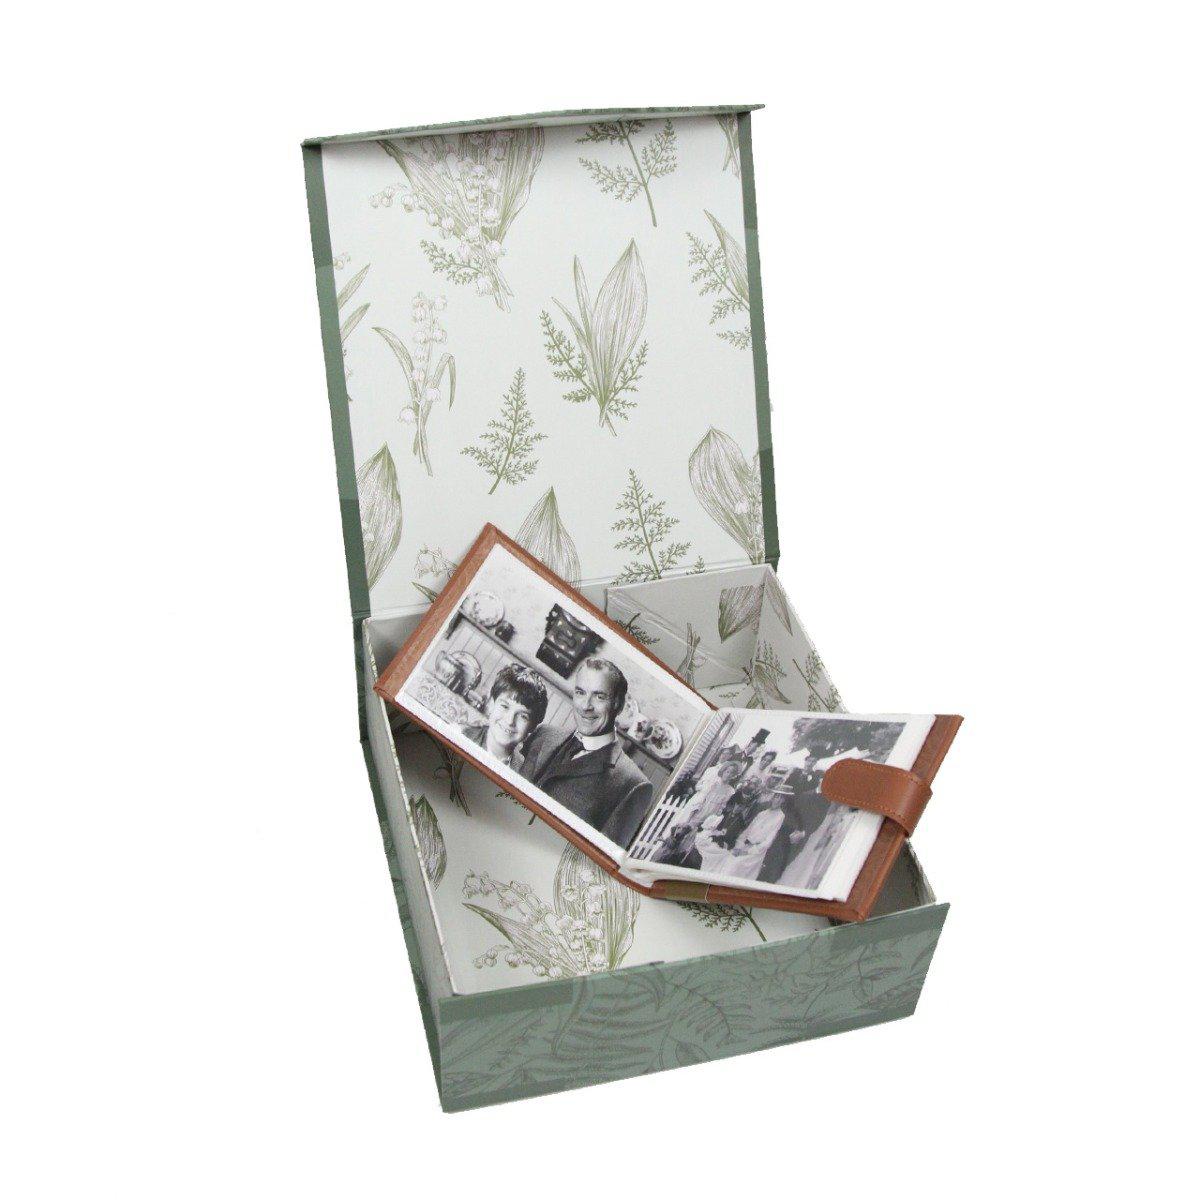 Green Gables Memory Box and Photo Album